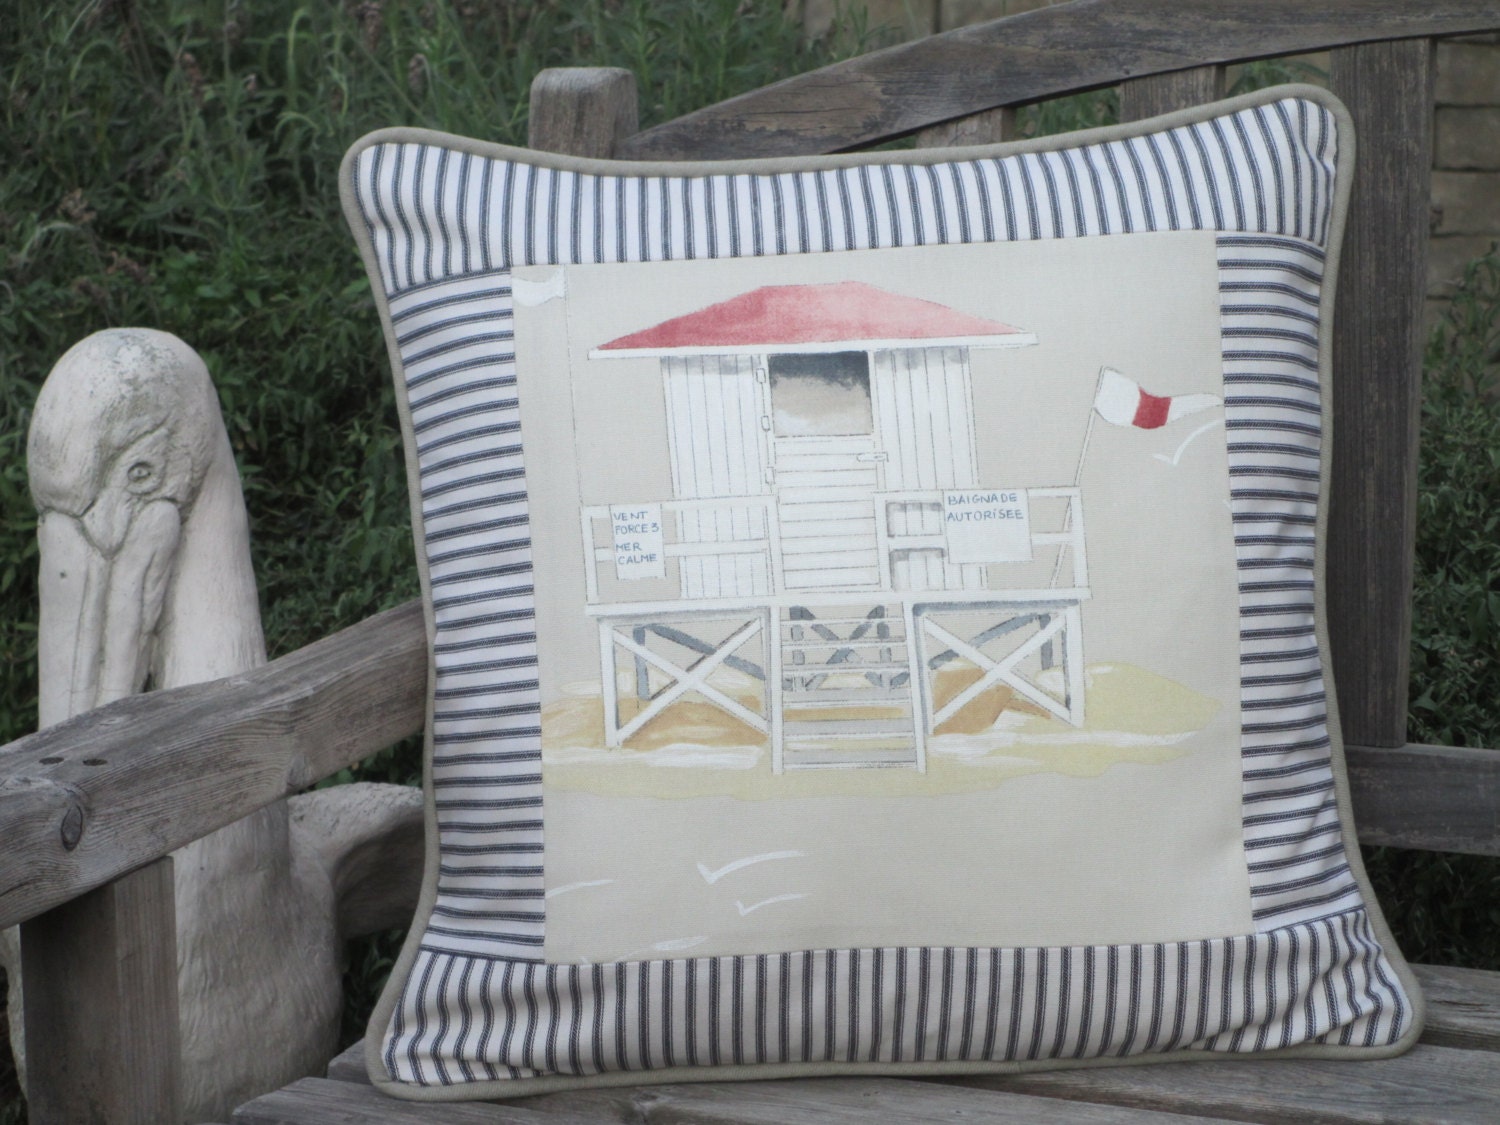 Beach House Decorative Pillows